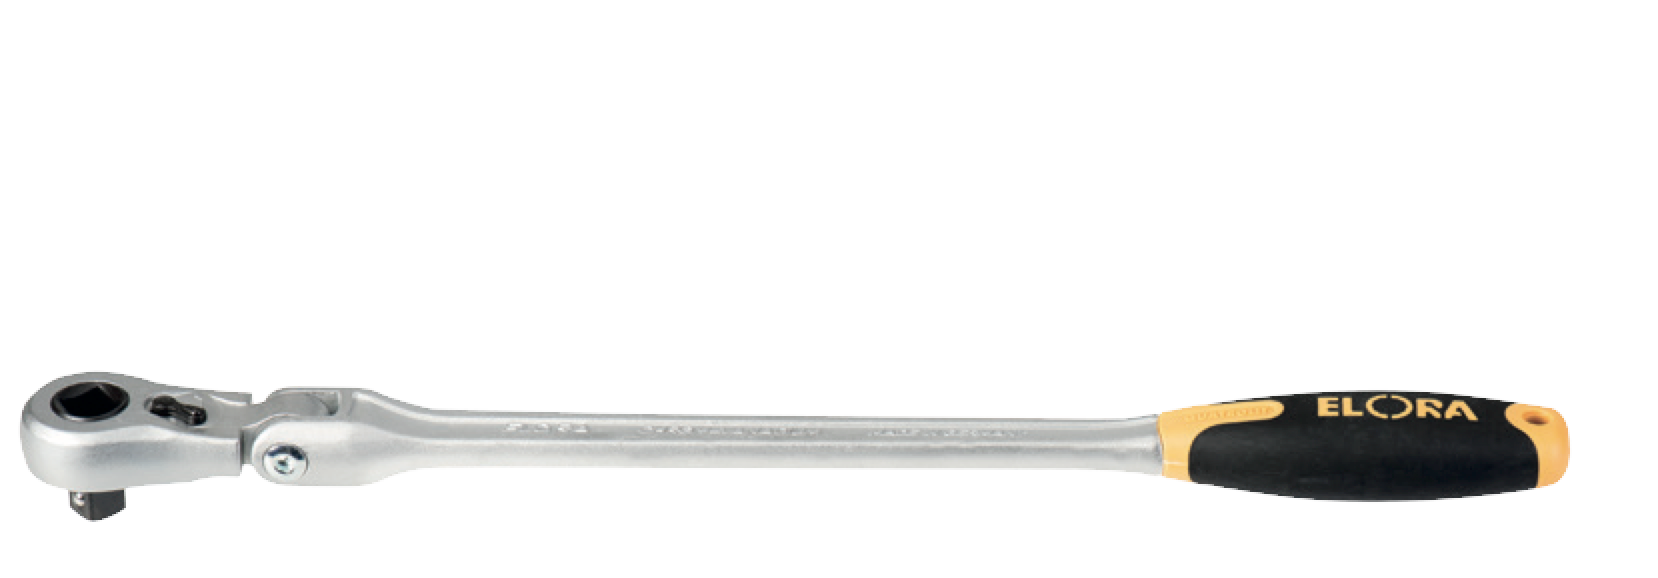 ELORA 770-L1G Reversible Ratchet With Hinge 1/2" (ELORA Tools) - Premium Reversible Ratchet from ELORA - Shop now at Yew Aik.